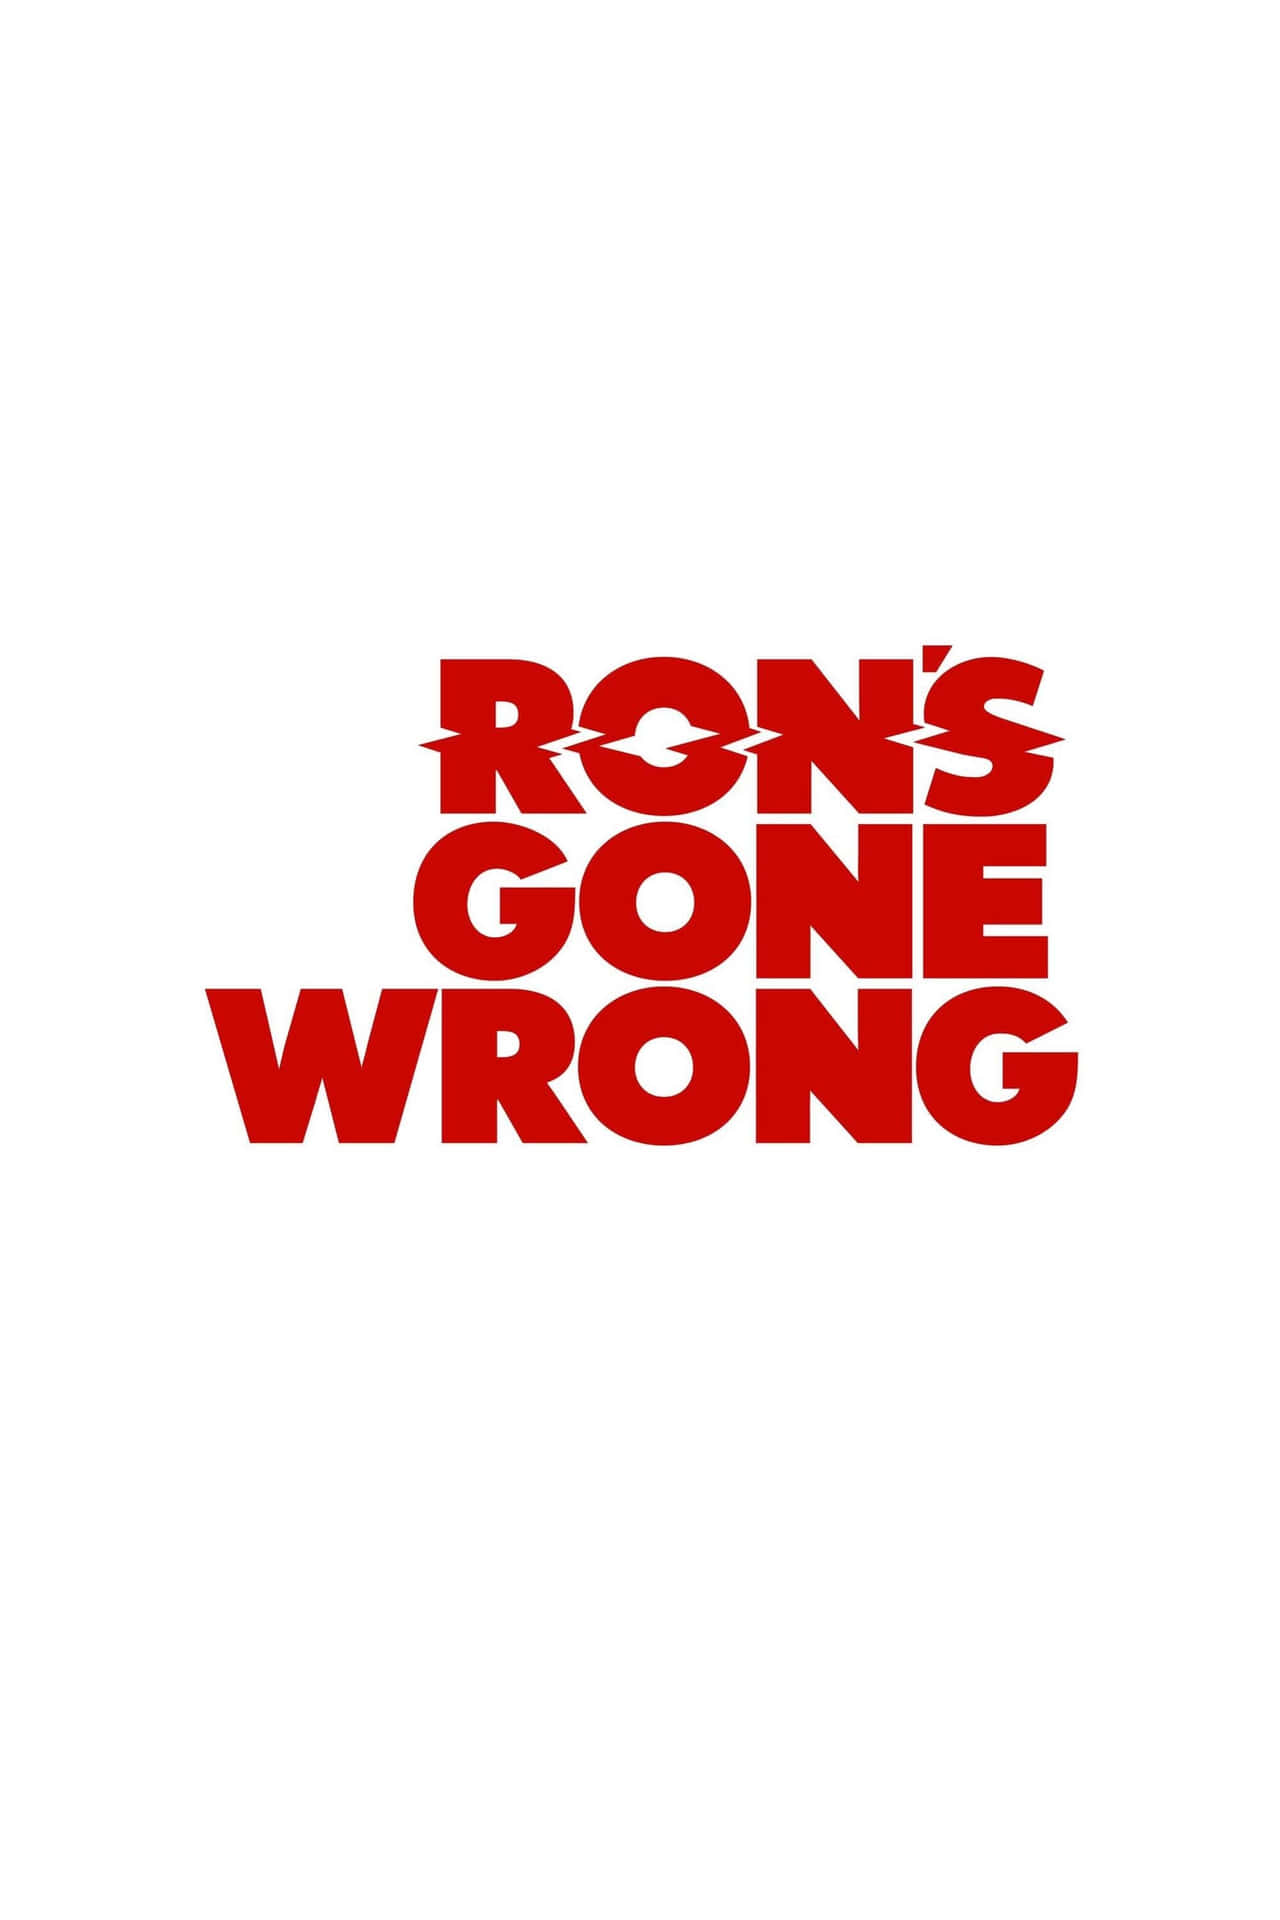 Ron's Gone Wrong Logo Wallpaper